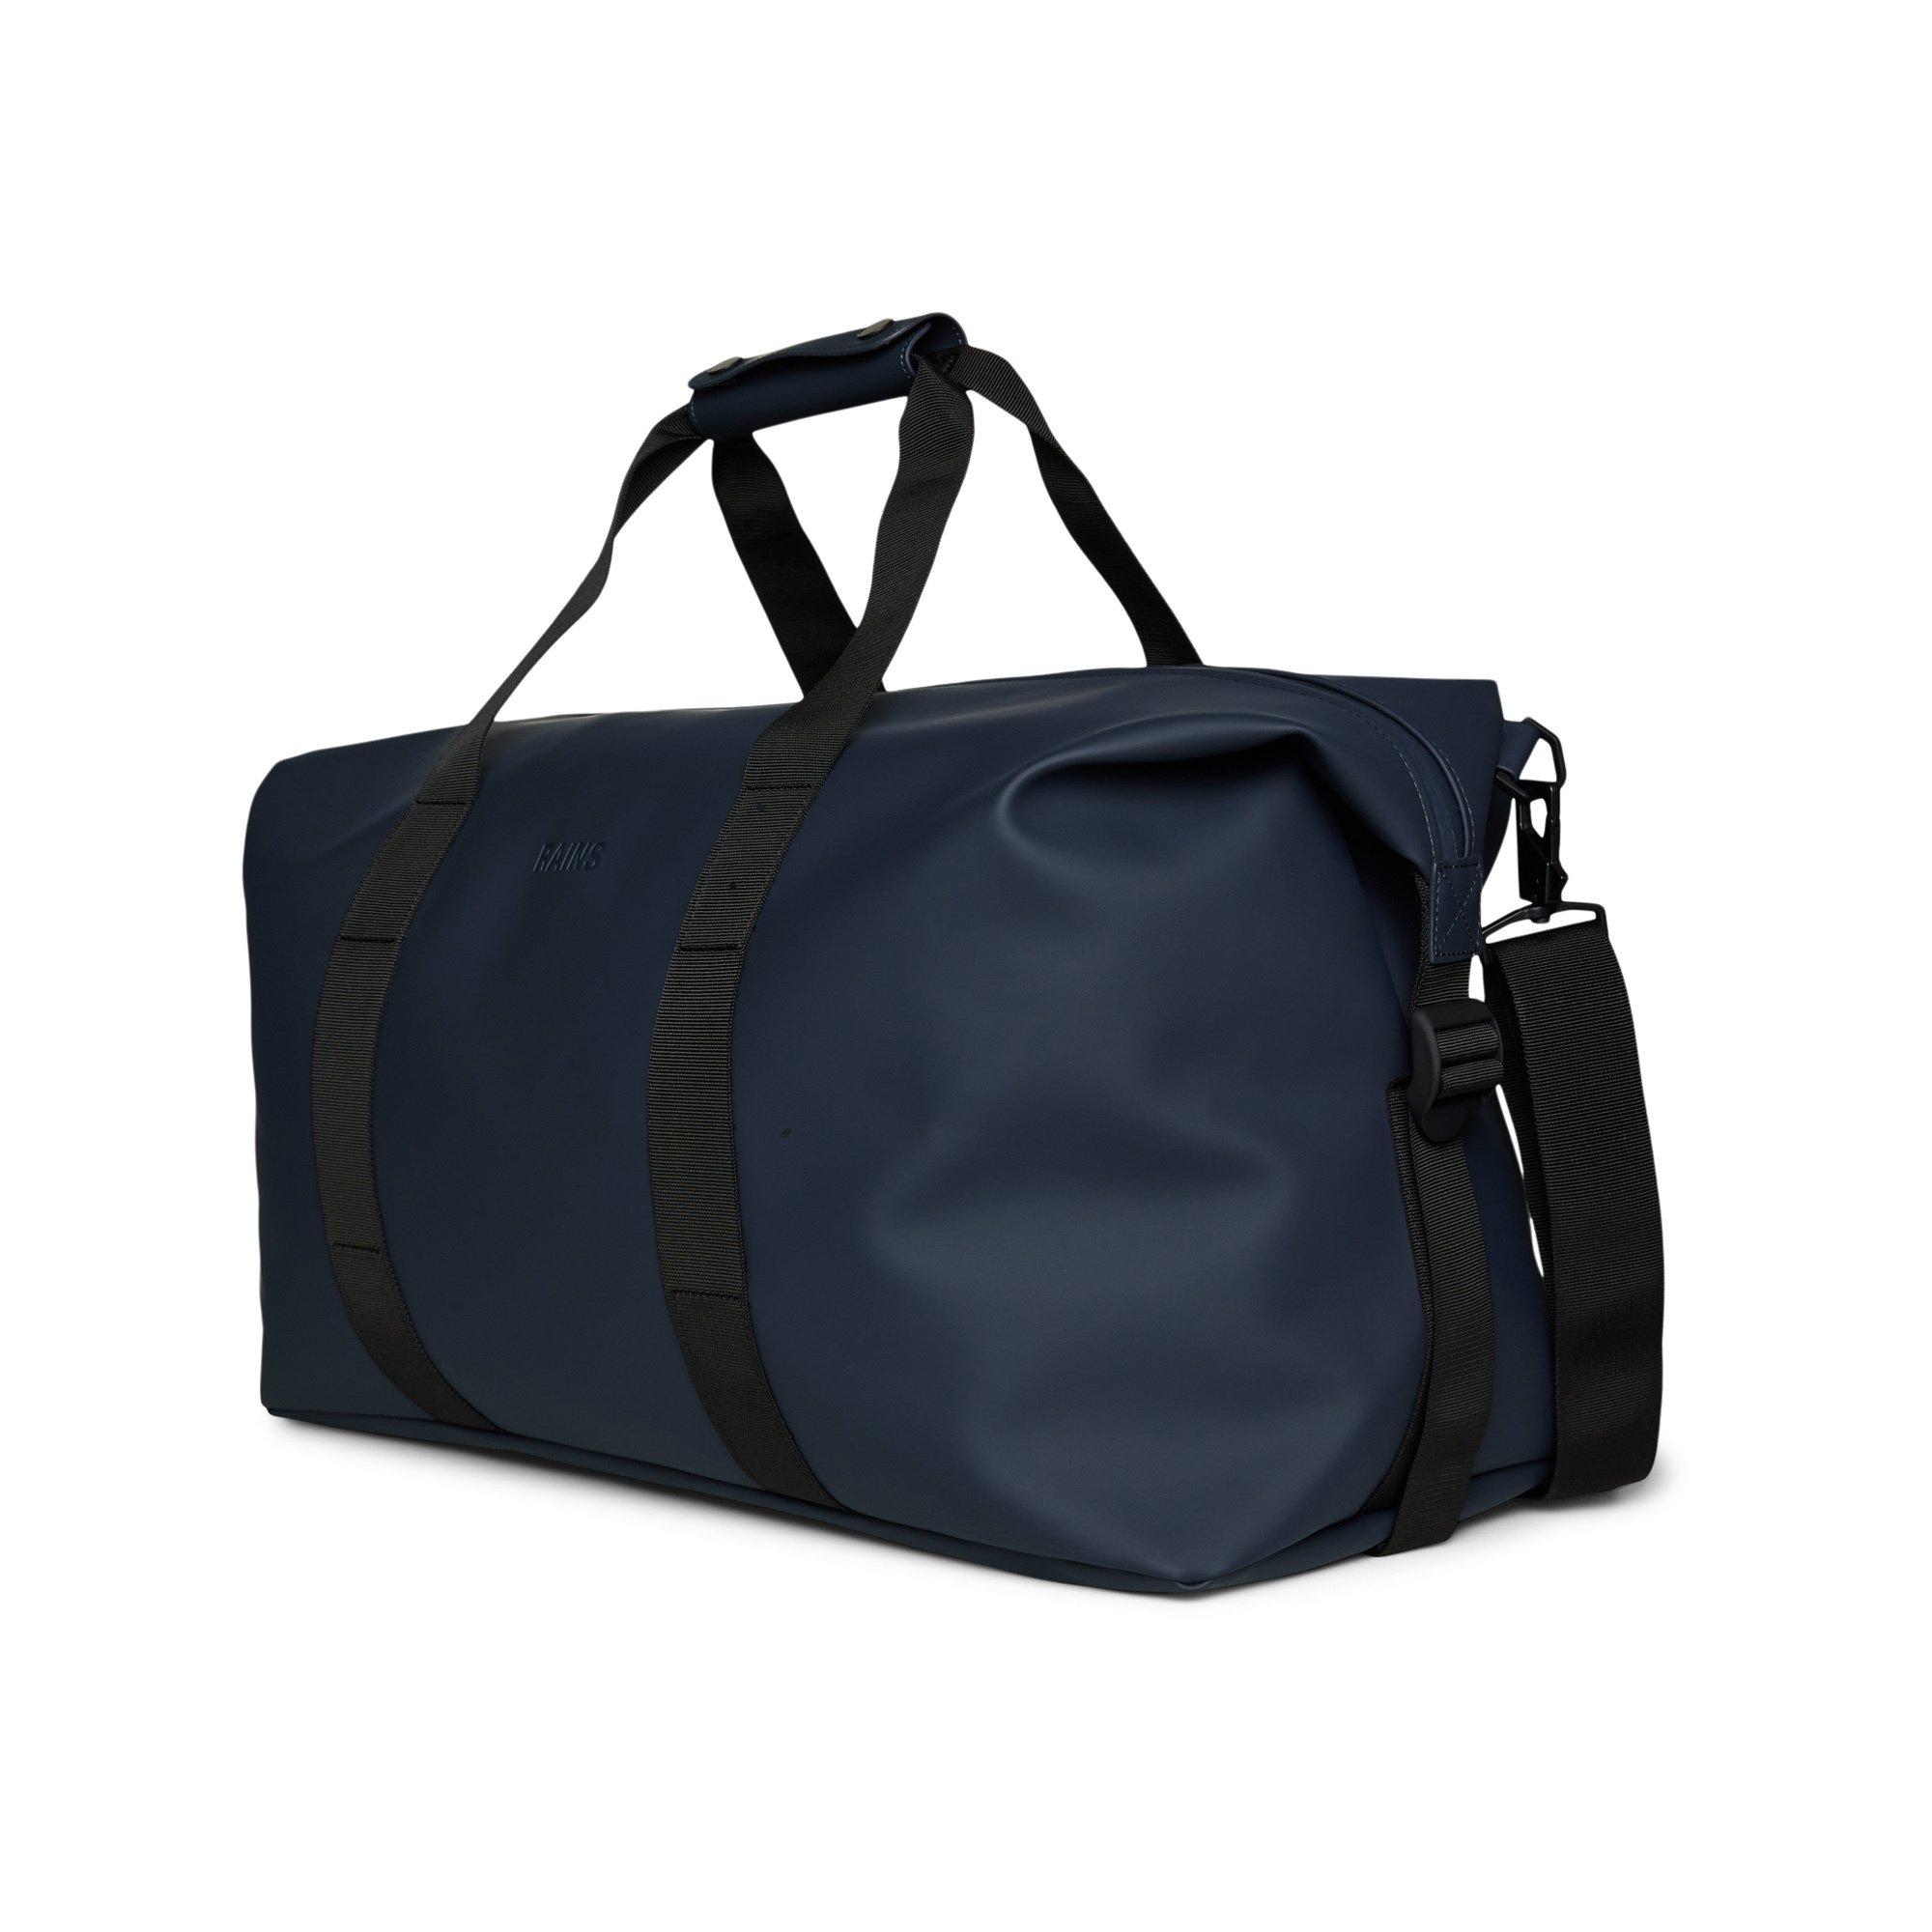 RAINS Hilo Weekend Bag  Tasche 